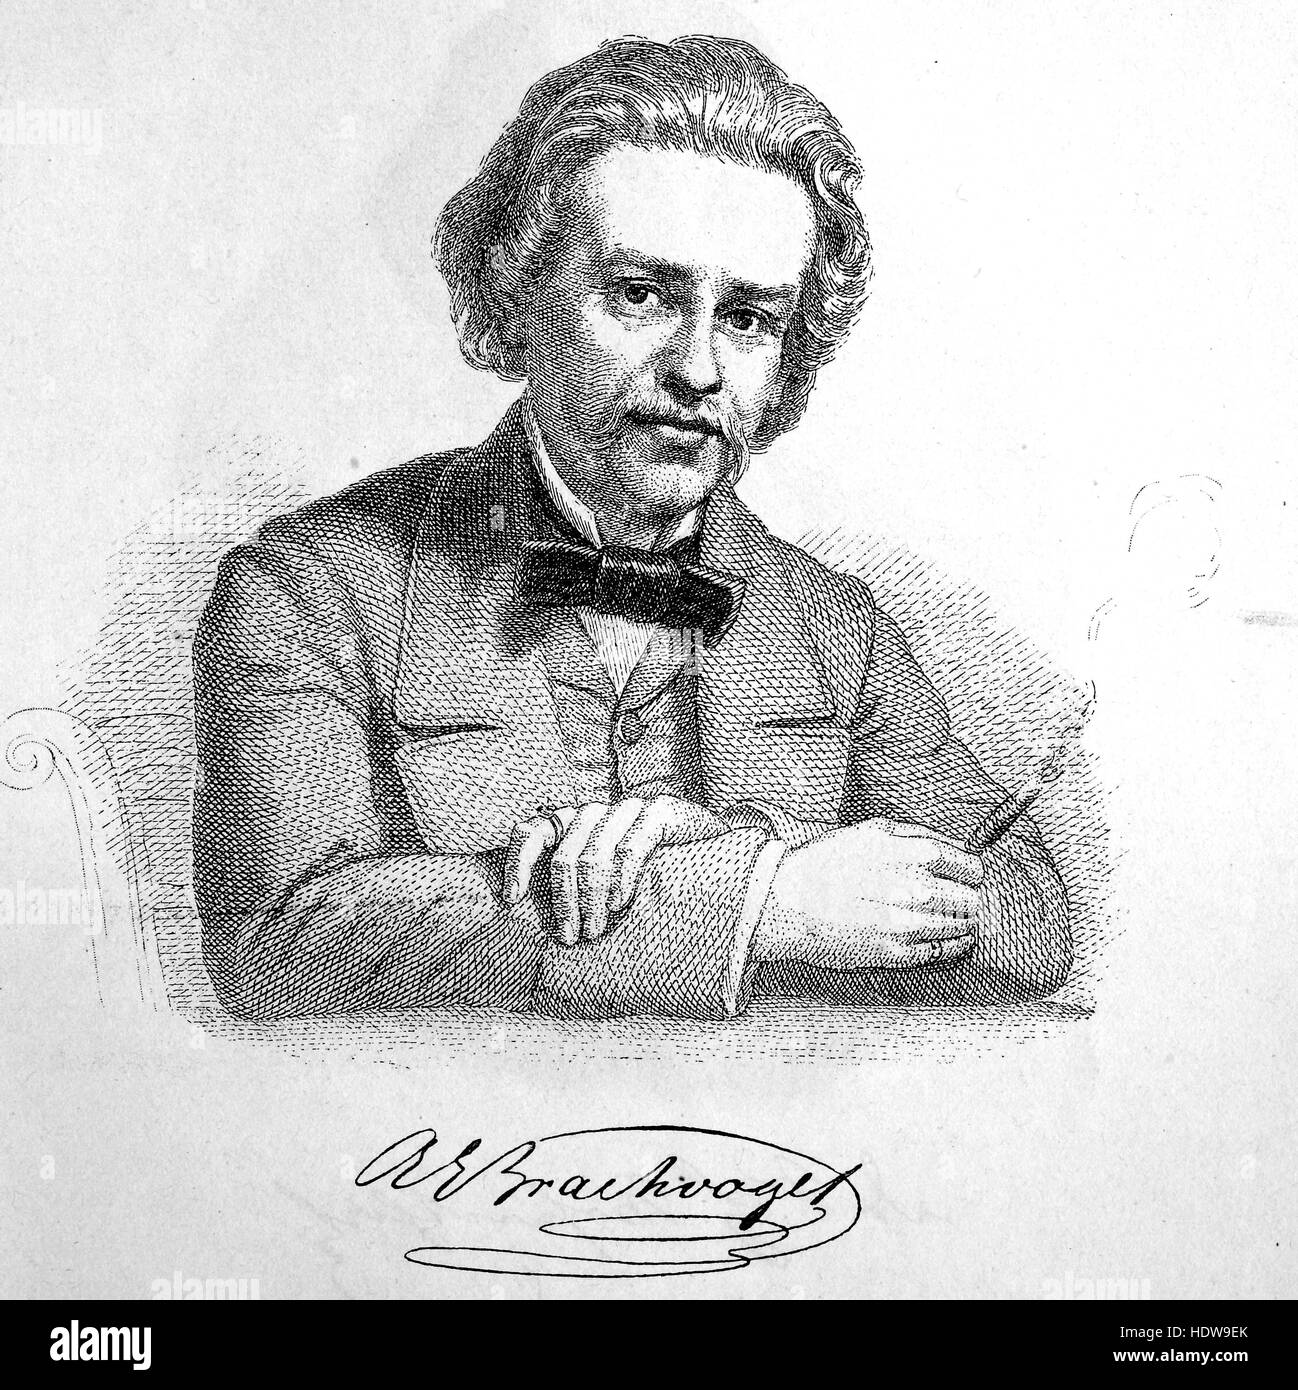 Albert Emil Brachvogel, 1824-1878, a German writer., woodcut from the year 1880 Stock Photo